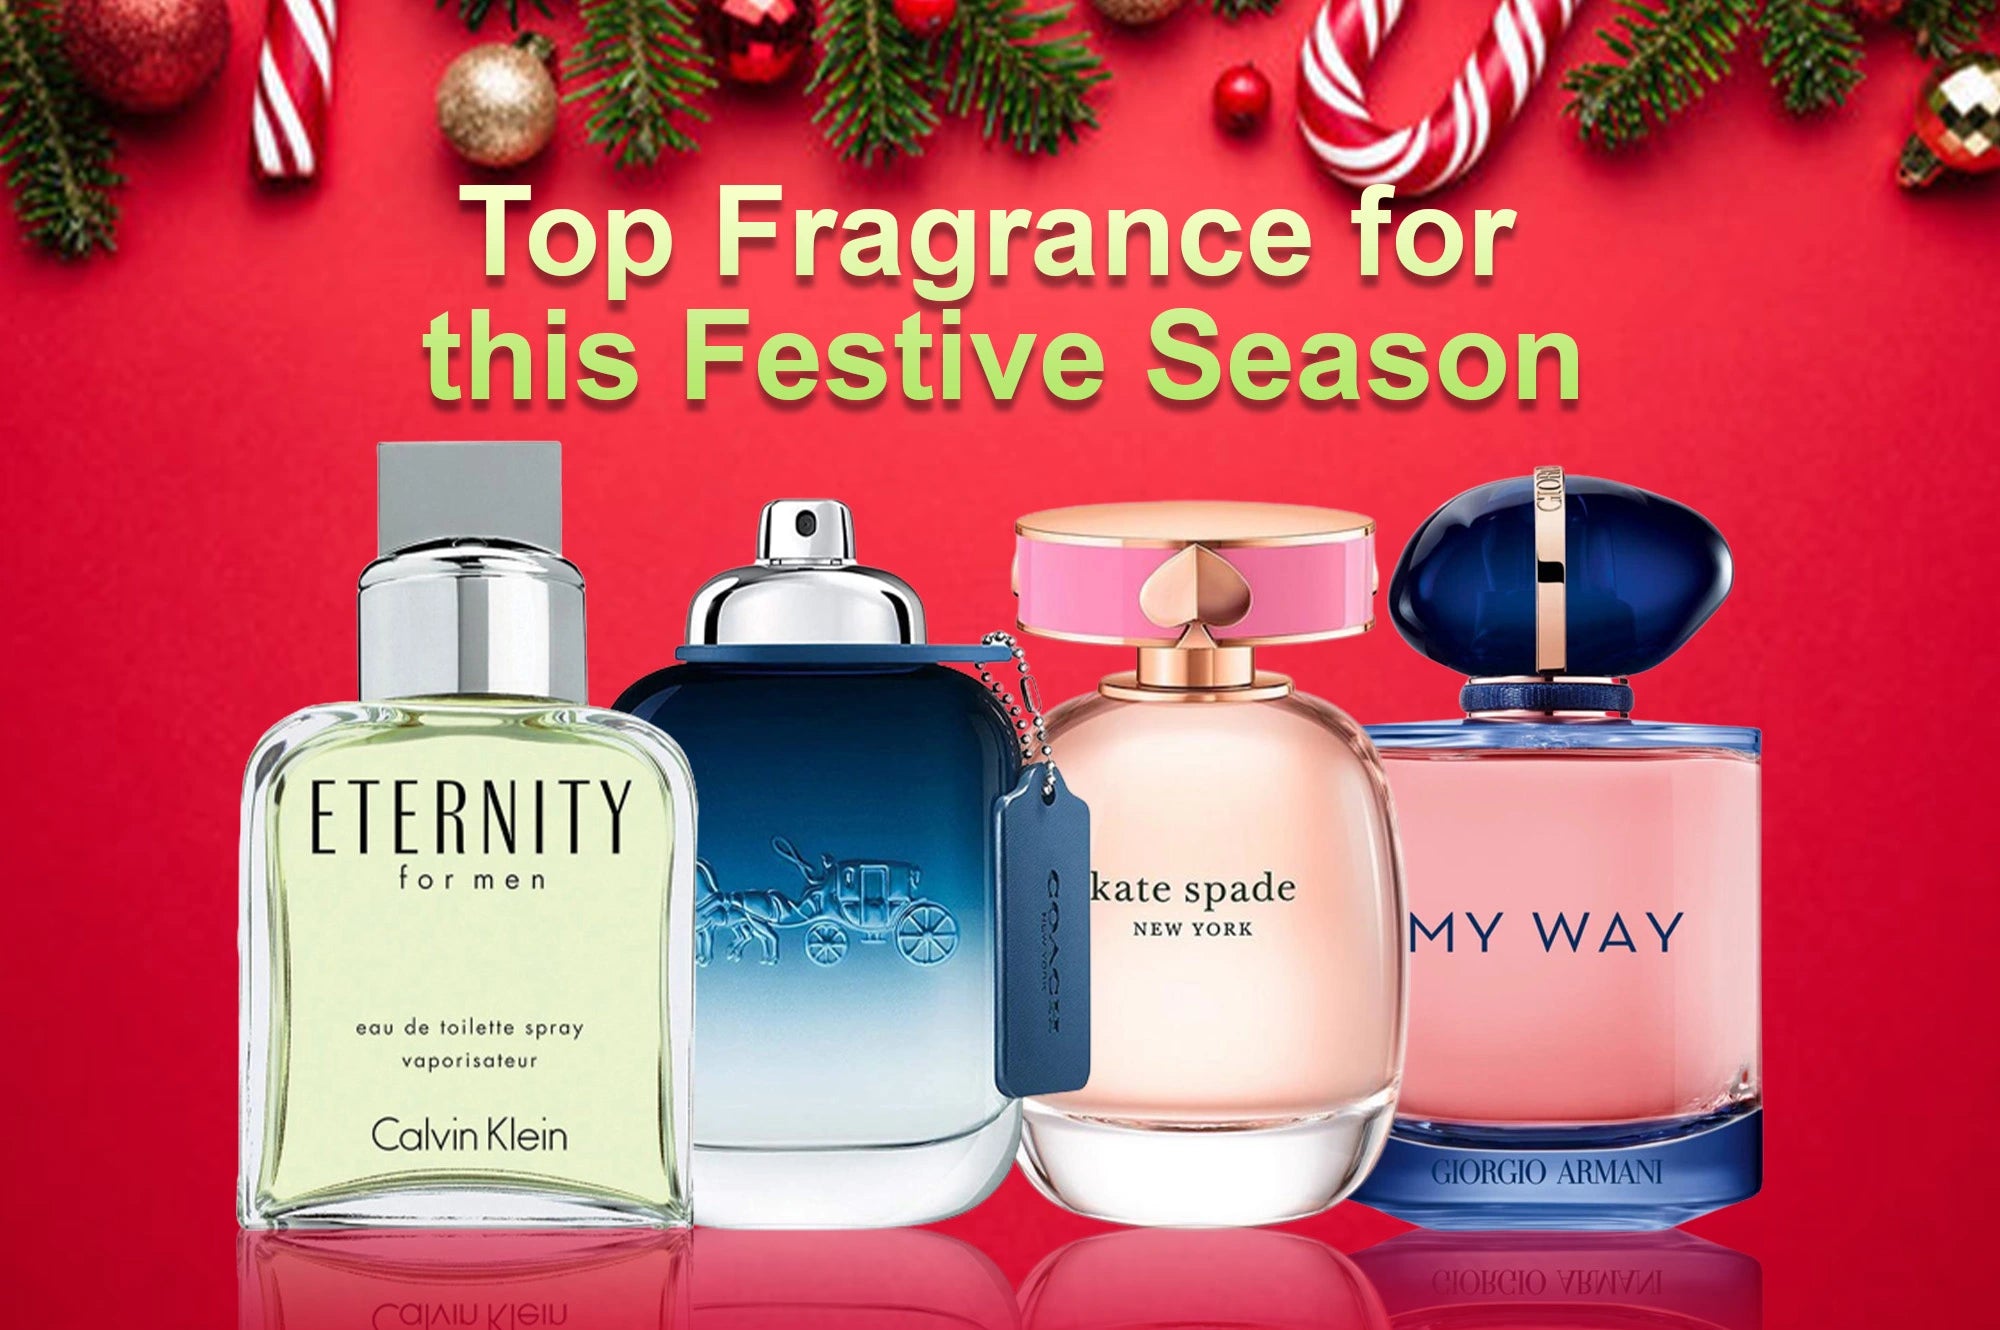 Top Fragrance for this Festive Season